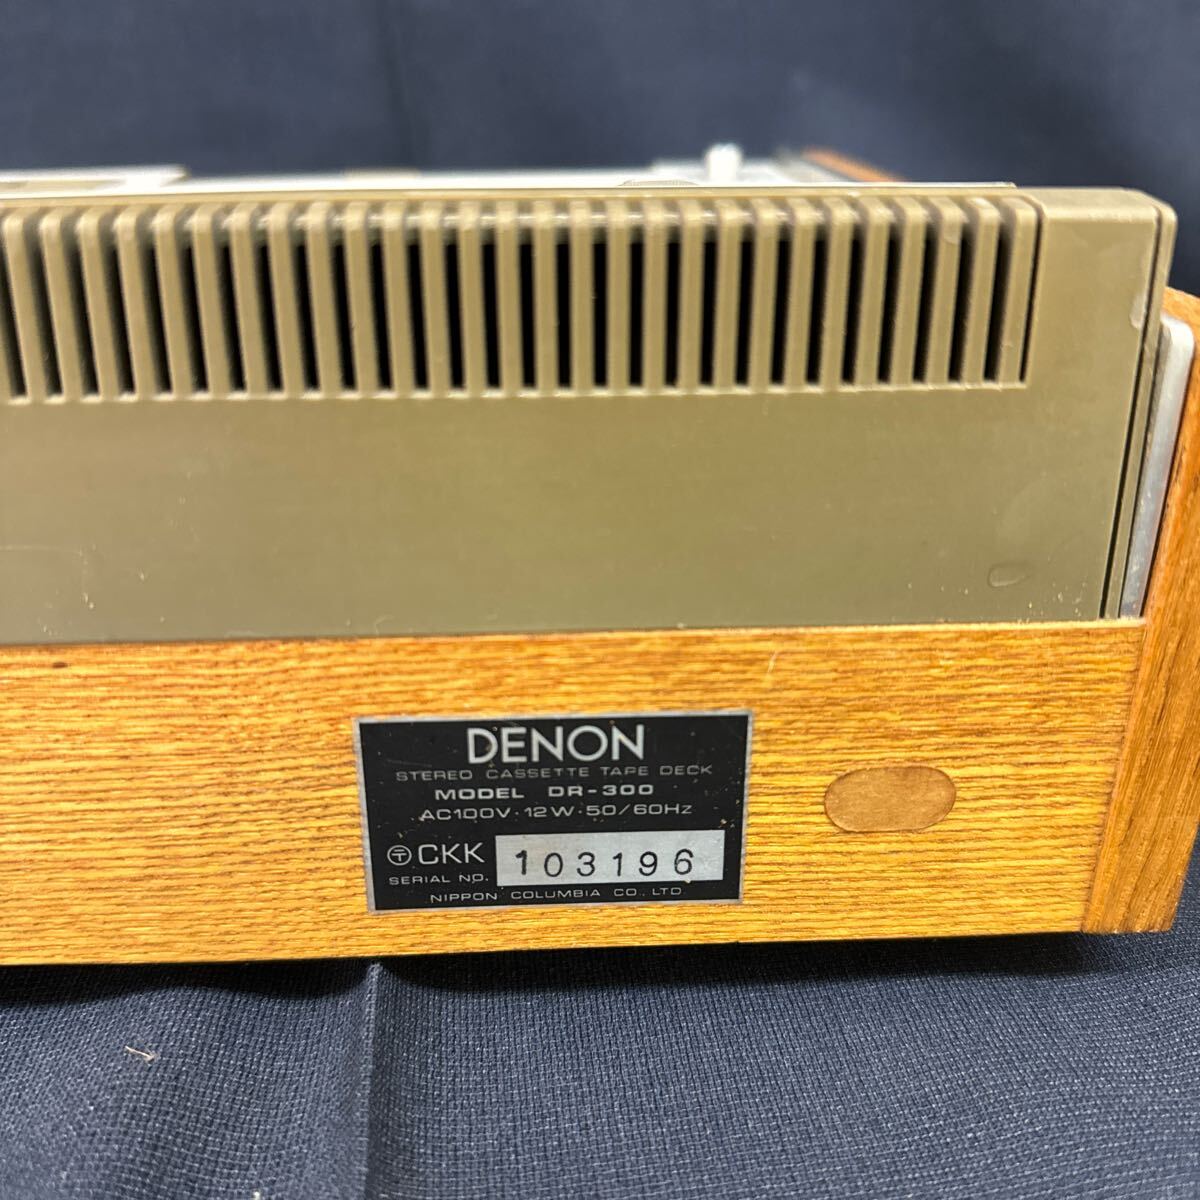 * used DENON/ Denon stereo cassette tape deck DR-300 audio equipment 163-72